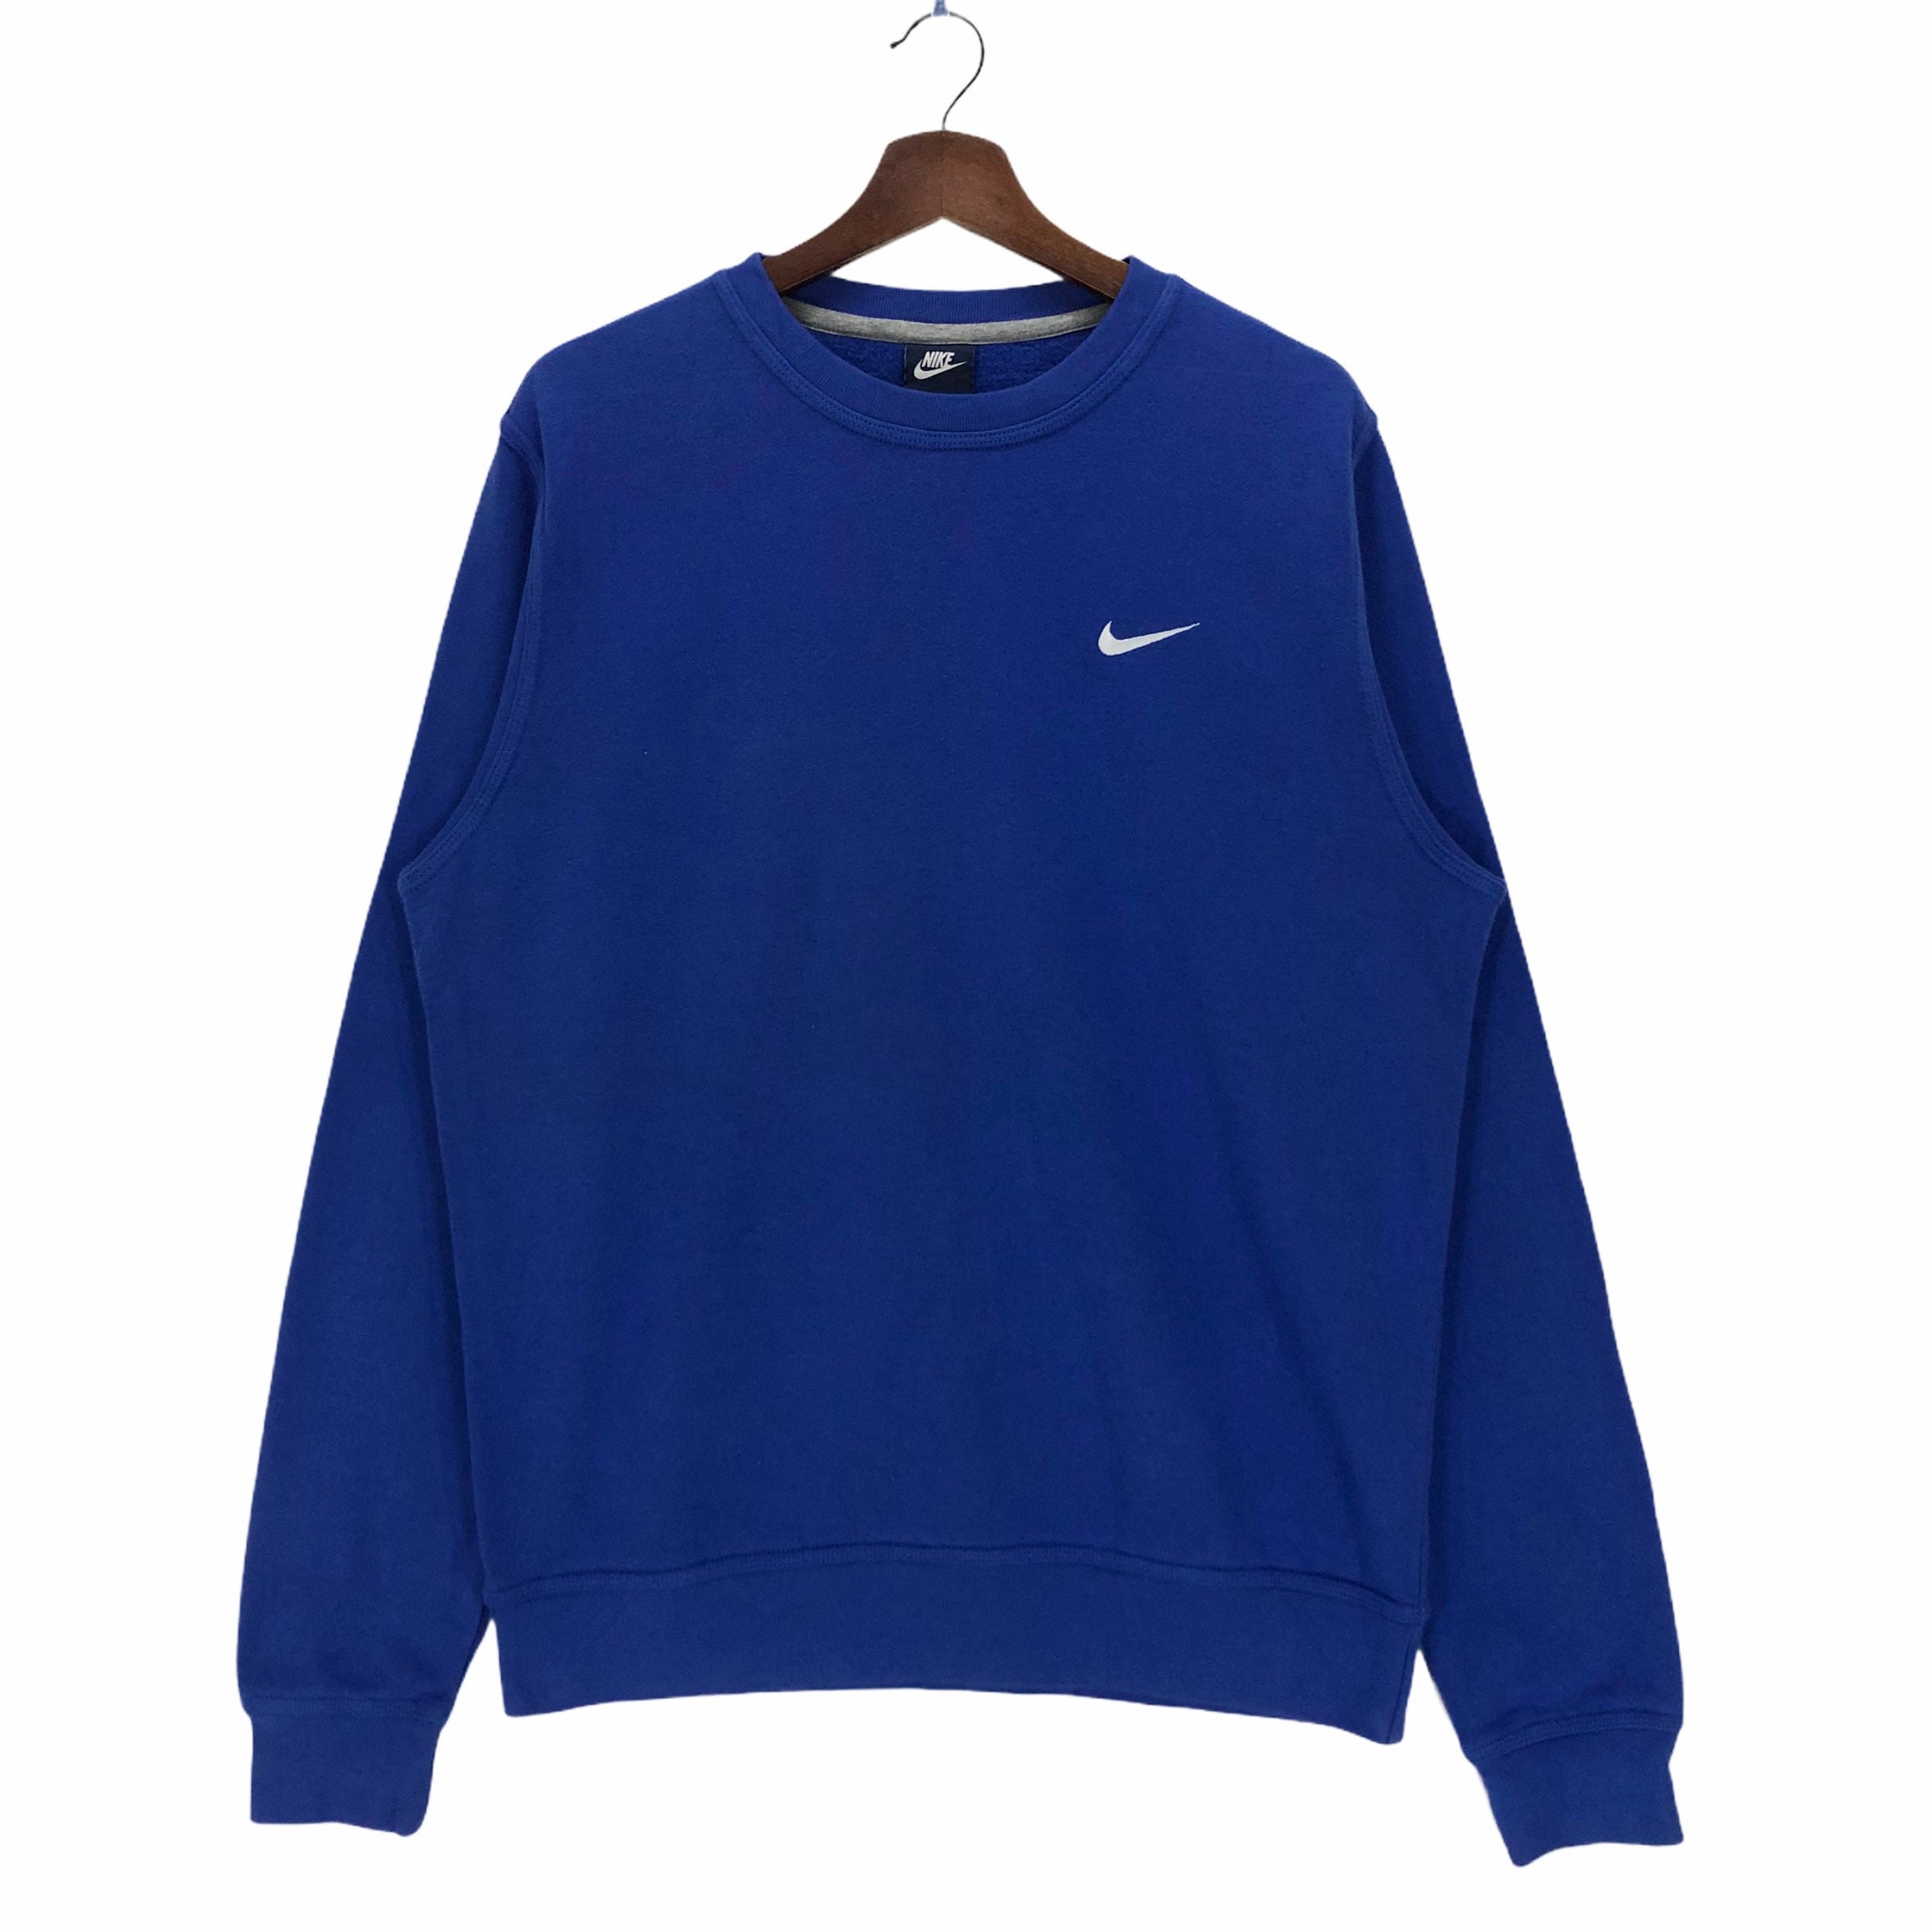 Vintage Nike Sweatshirt Blue Nike Sweatshirt Crewneck | Etsy